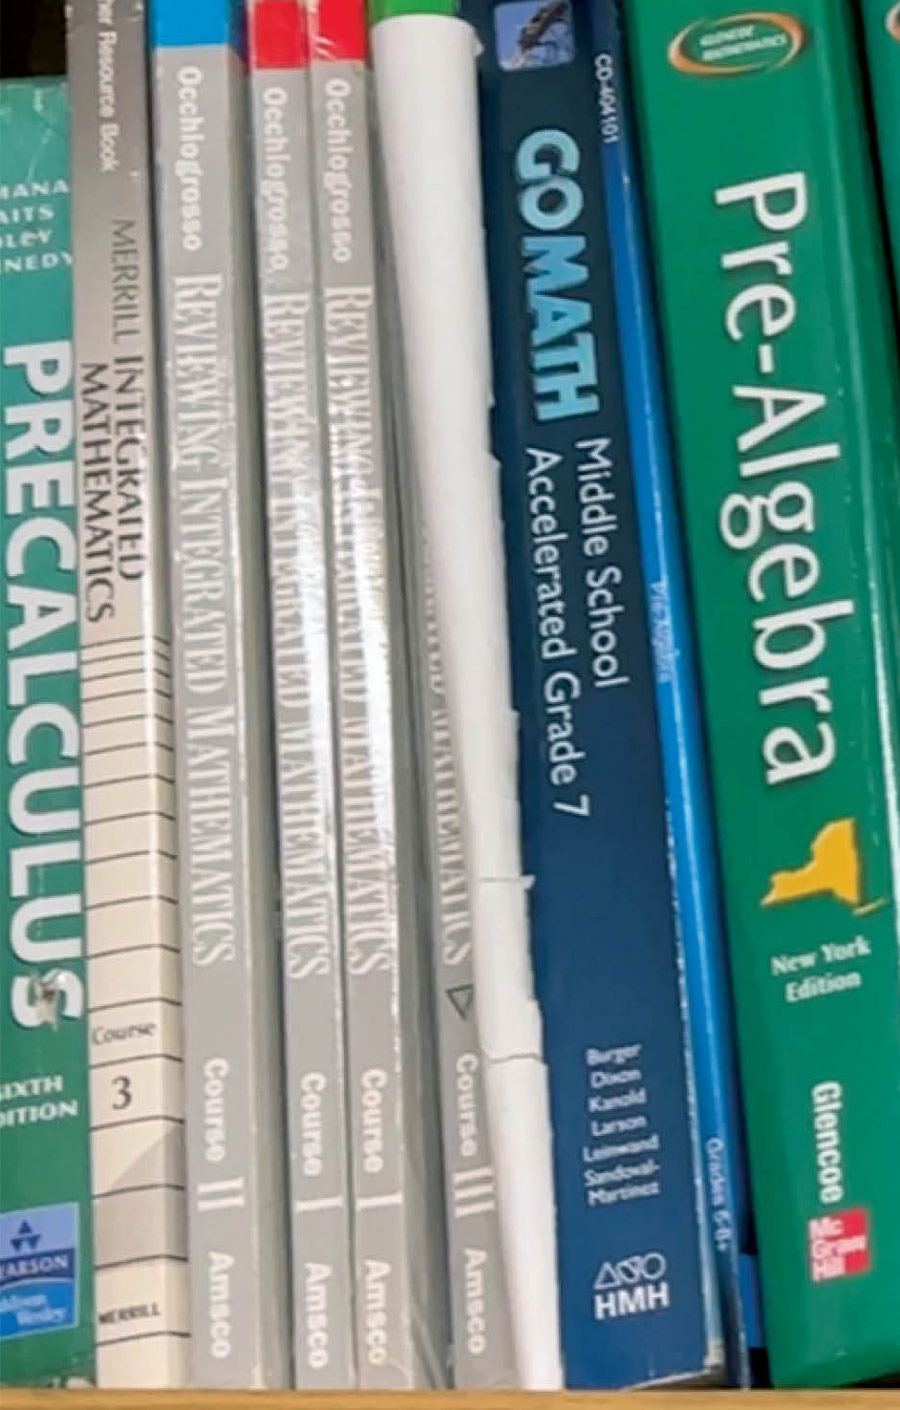 math books on a shelf